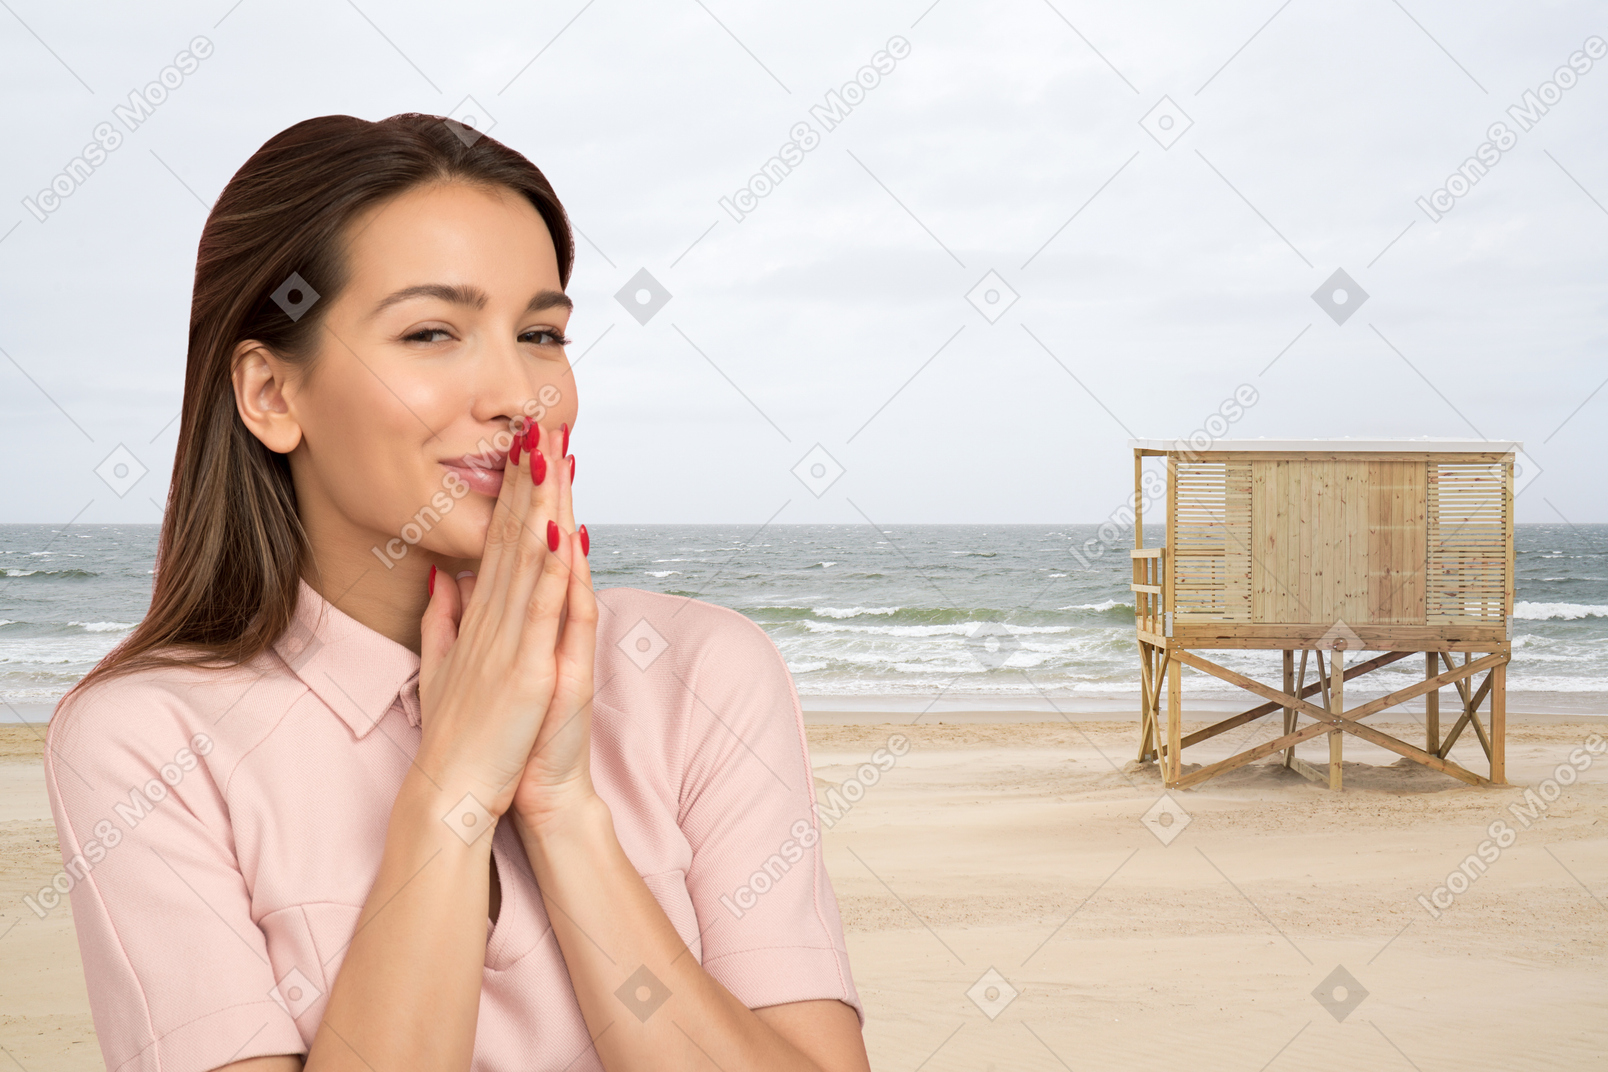 Couple kissing on the beach